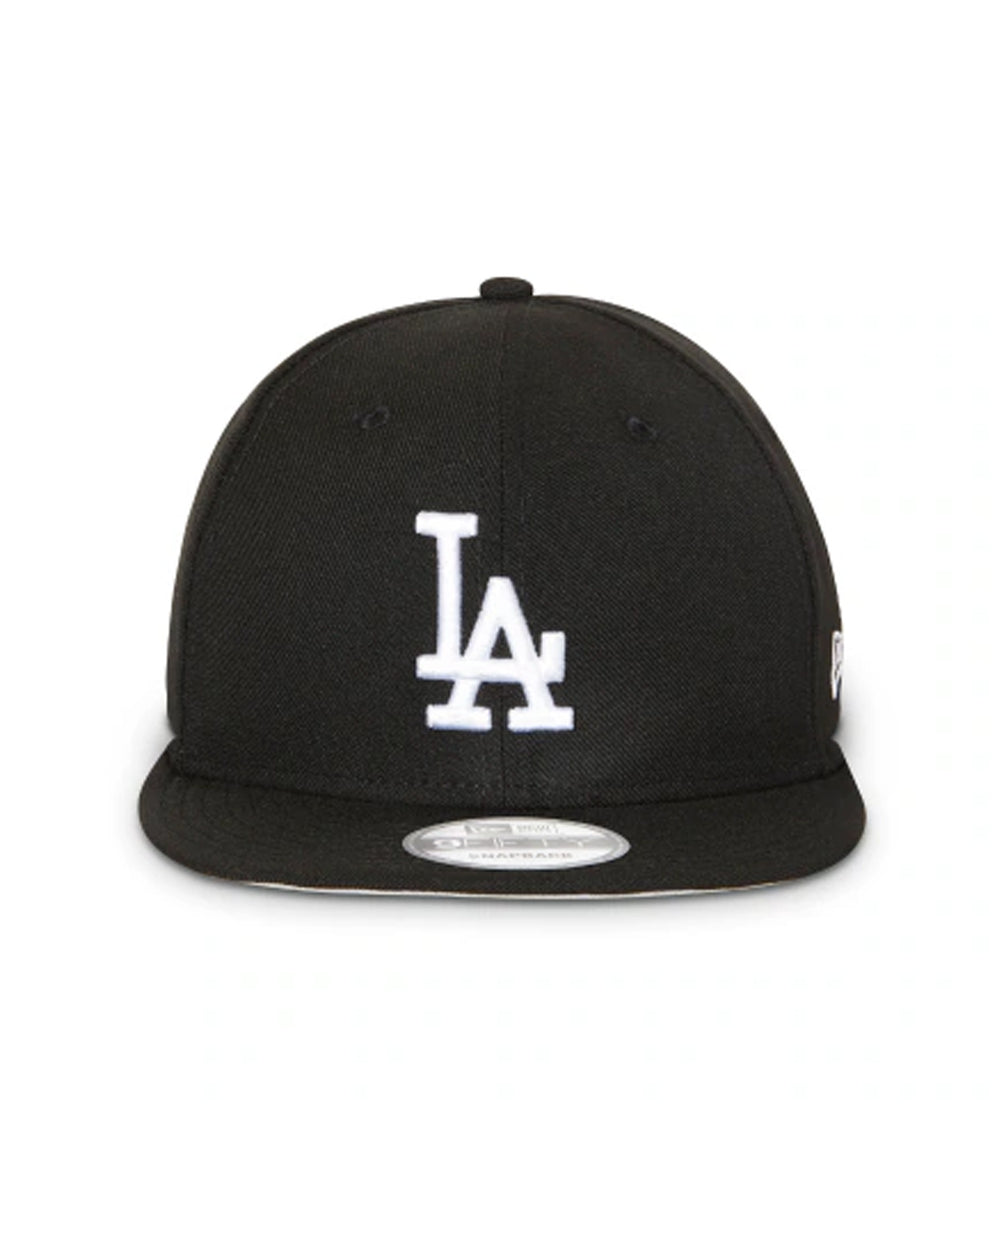 Los Angeles Dodgers Black on Black 9FIFTY Snapback